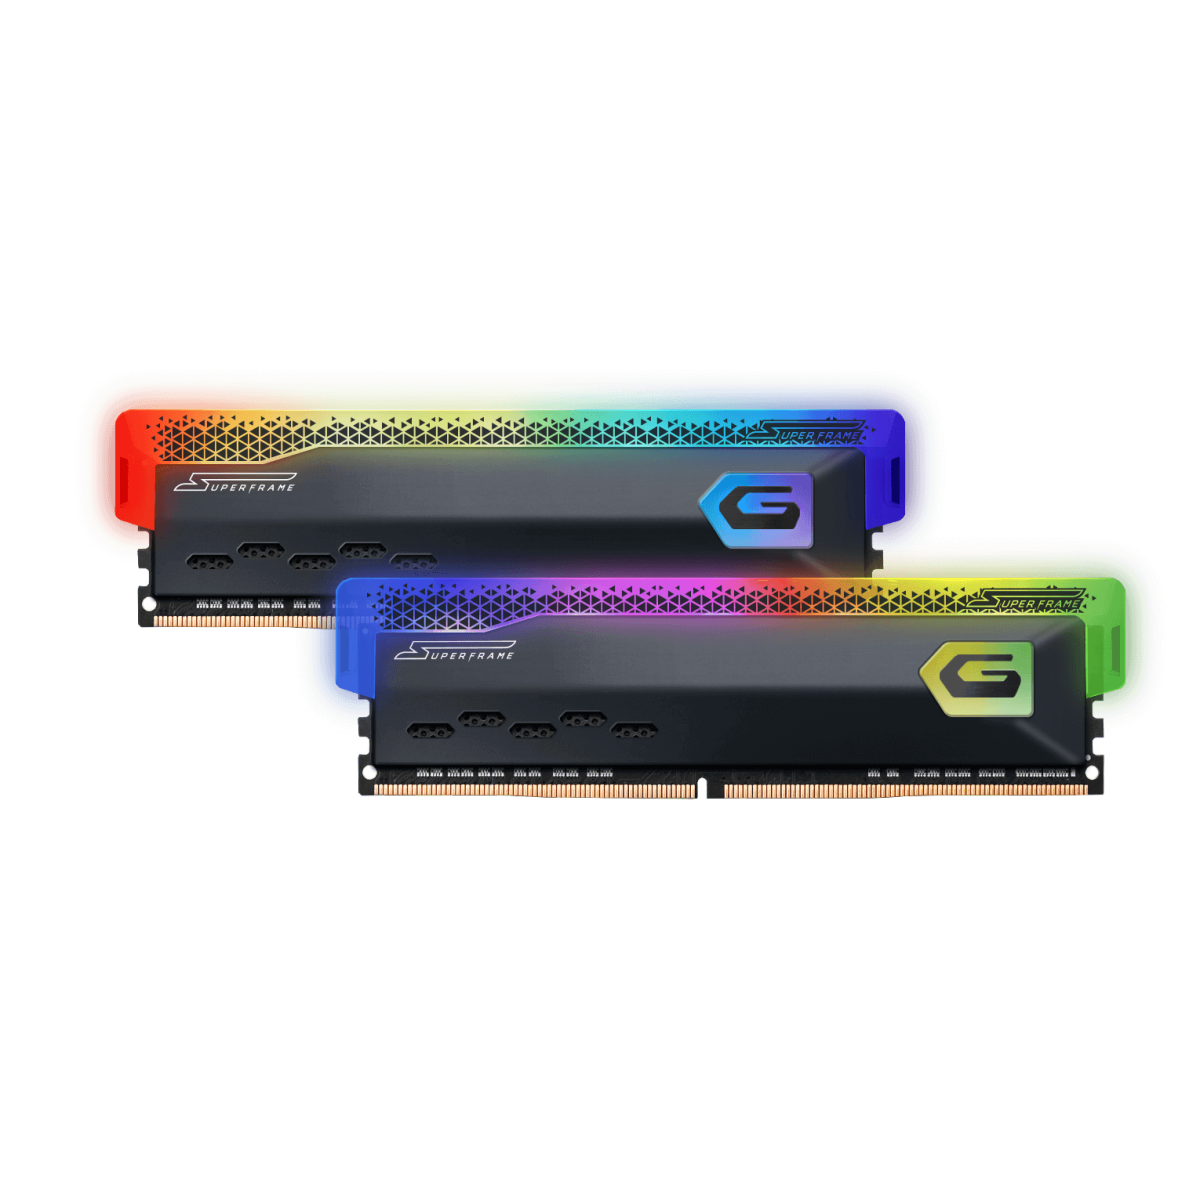 Kit Upgrade, Placa Mãe SuperFrame A520M Gaming, AMD Ryzen 5 4500, Memória DDR4 SuperFrame RGB 16GB (2X8GB)